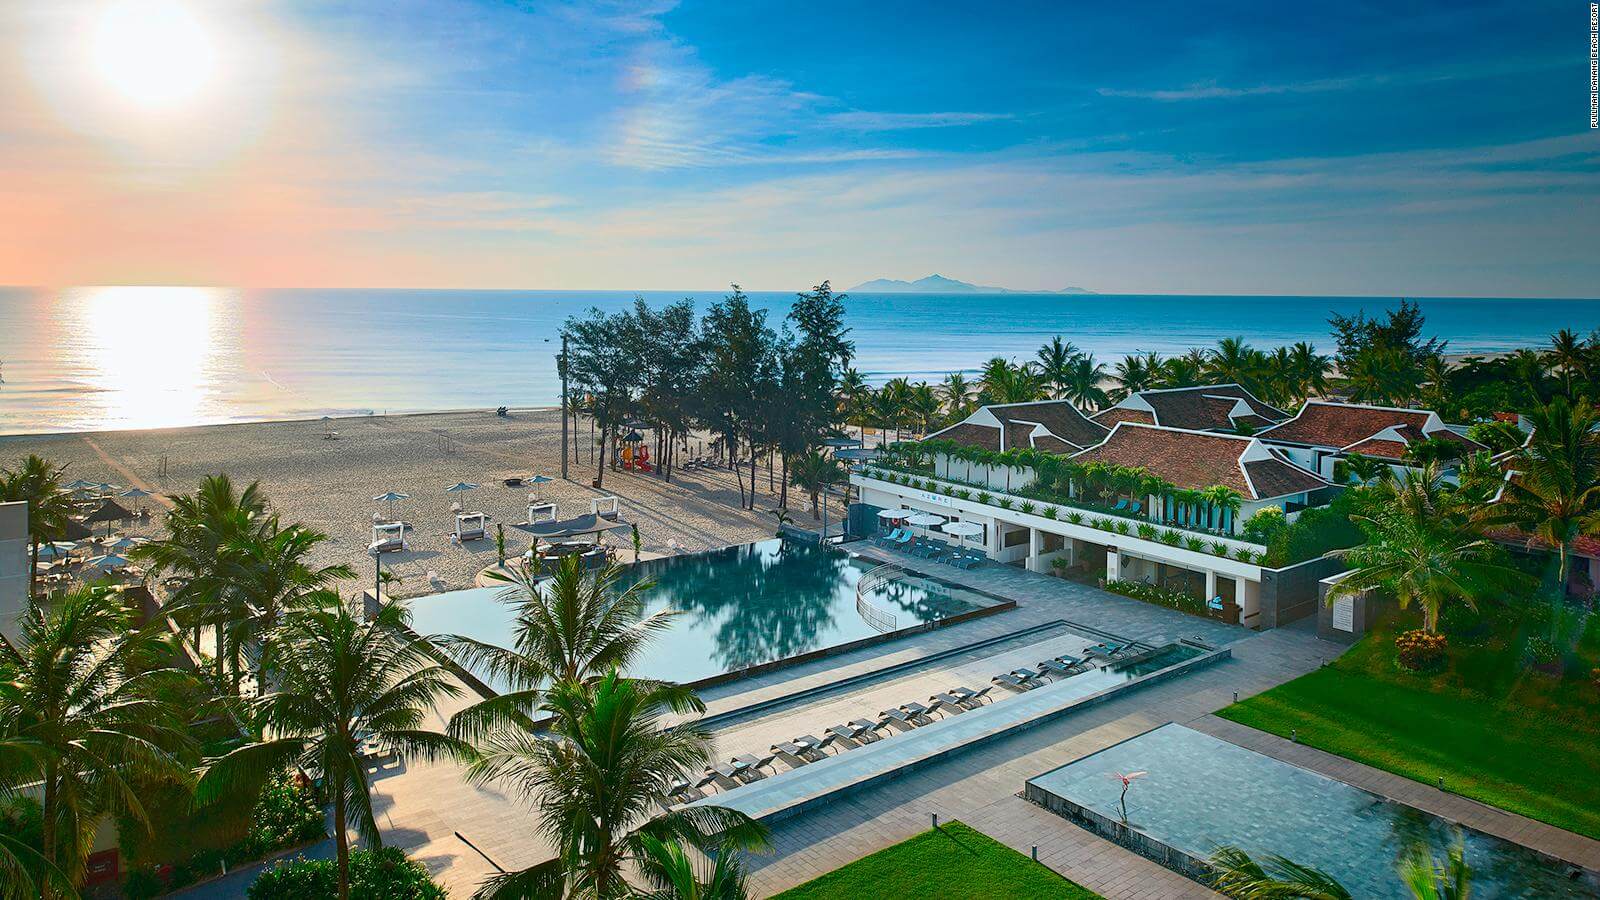 8 best beach resorts in Vietnam travelers should experience